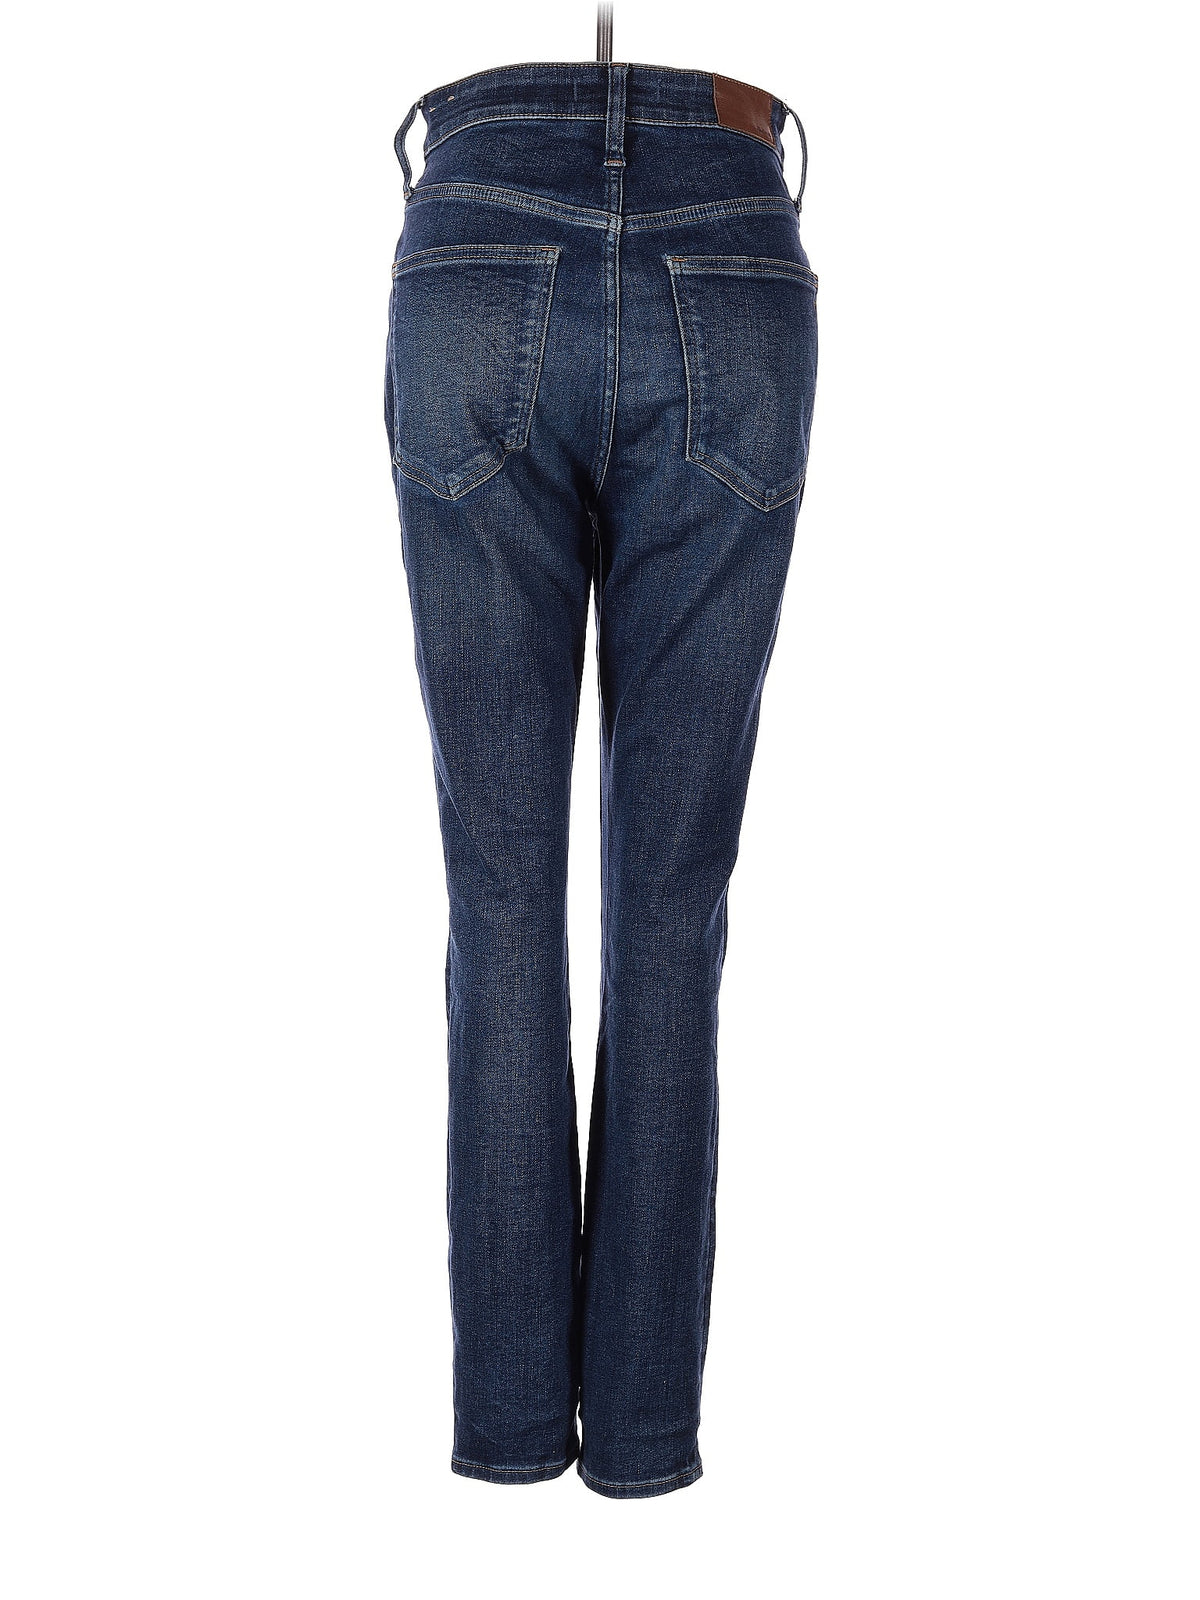 High-Rise Bootleg Jeans in Medium Wash waist size - 27